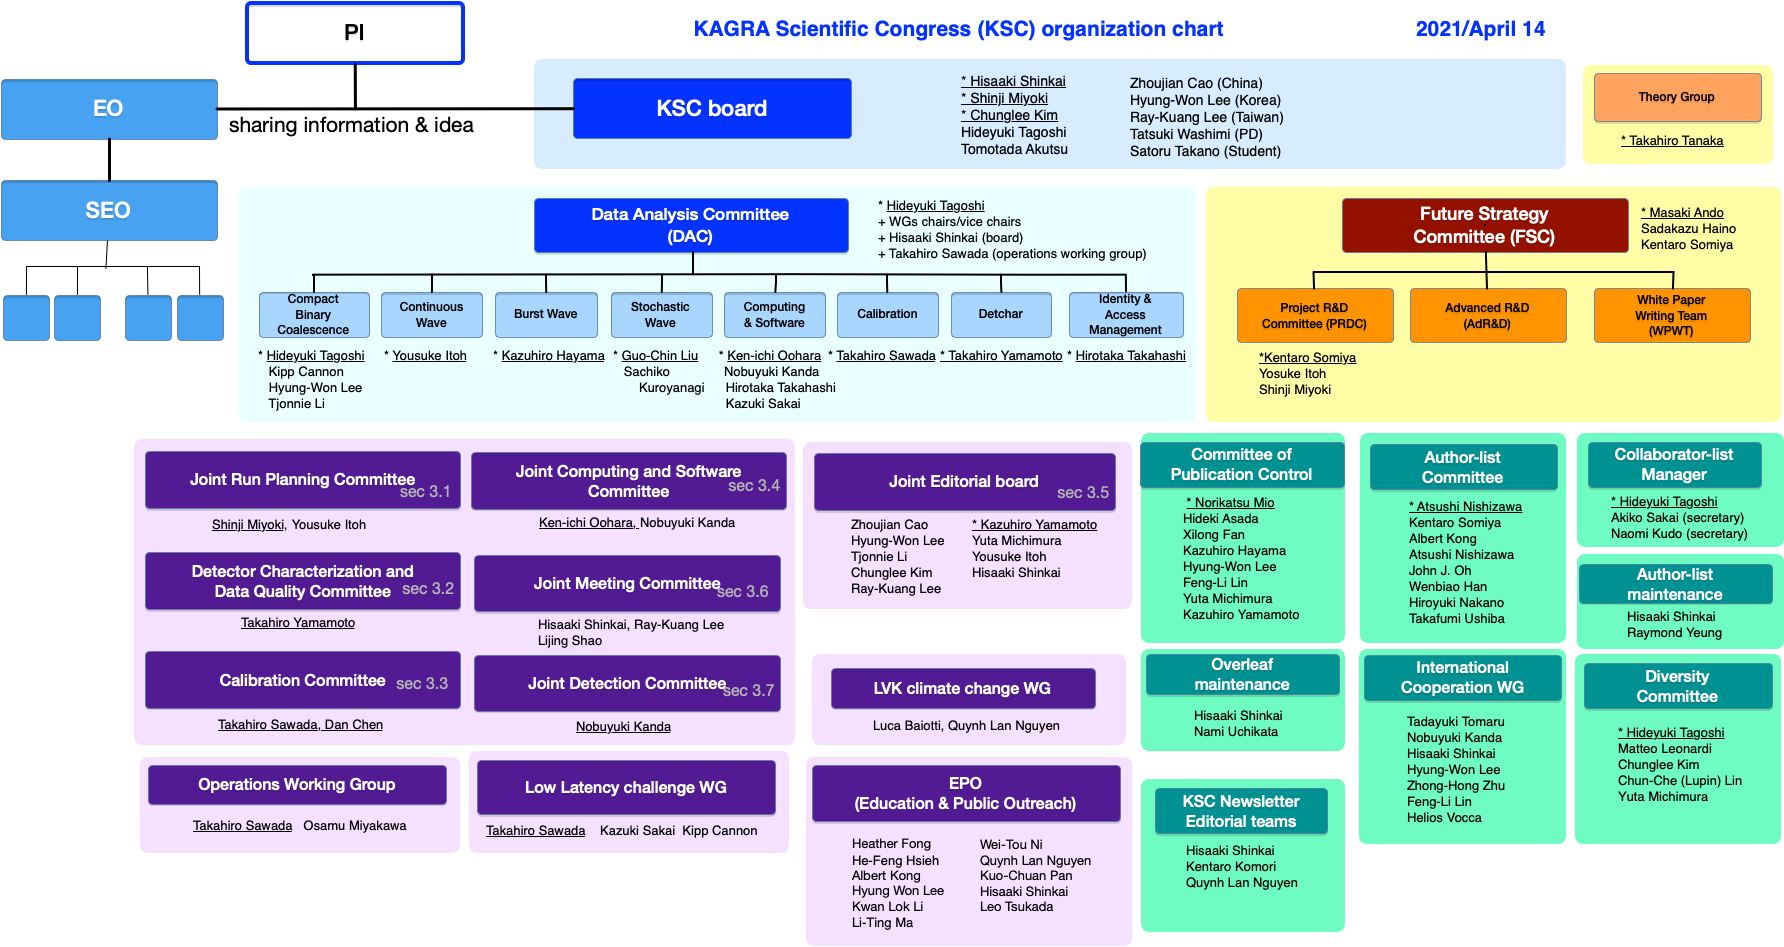 KSC organization chart (2021/April 14)